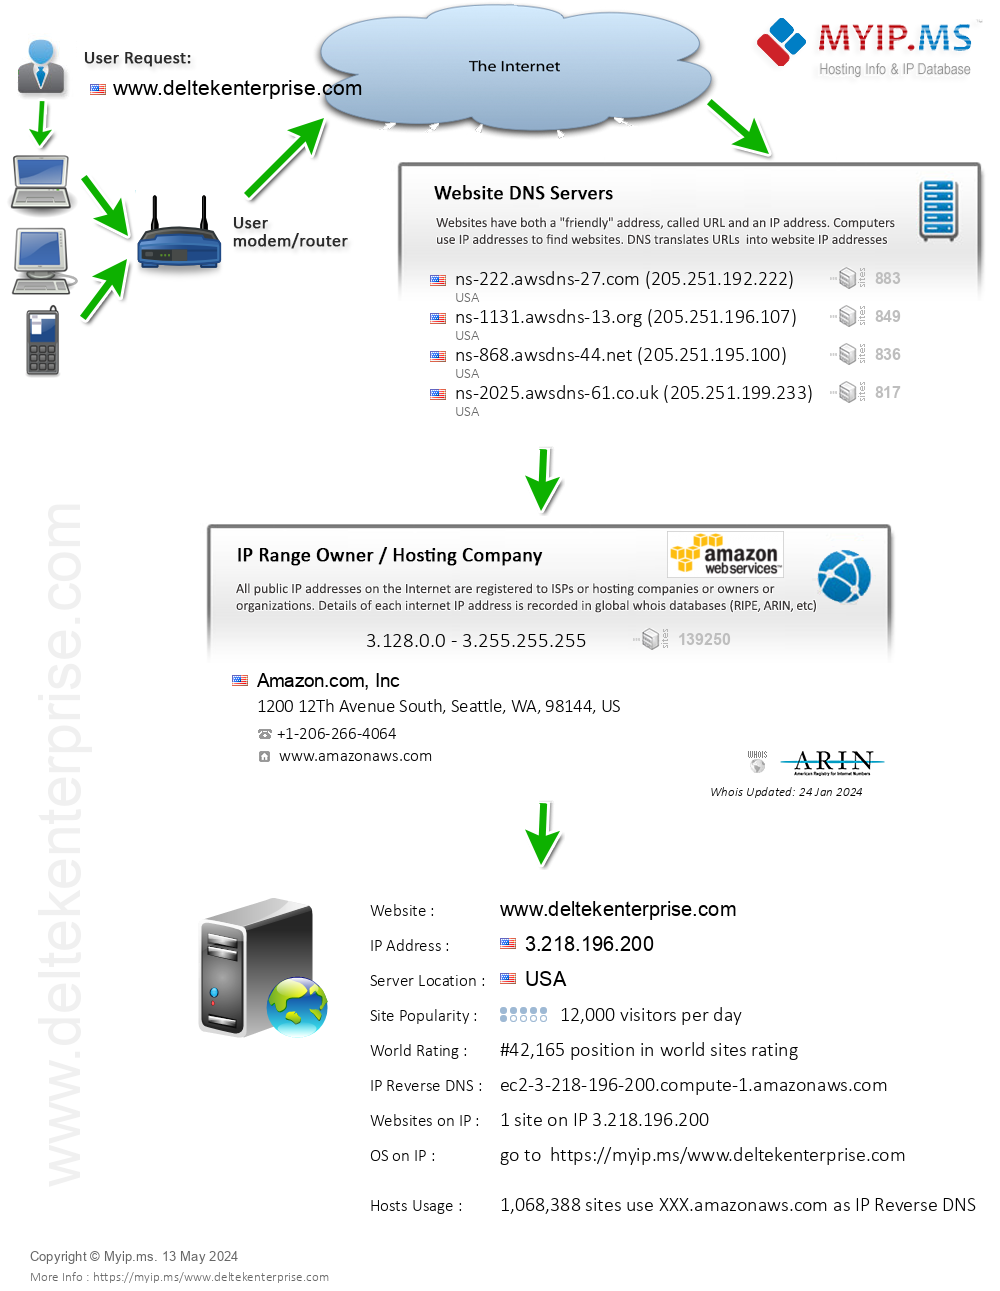 Deltekenterprise.com - Website Hosting Visual IP Diagram